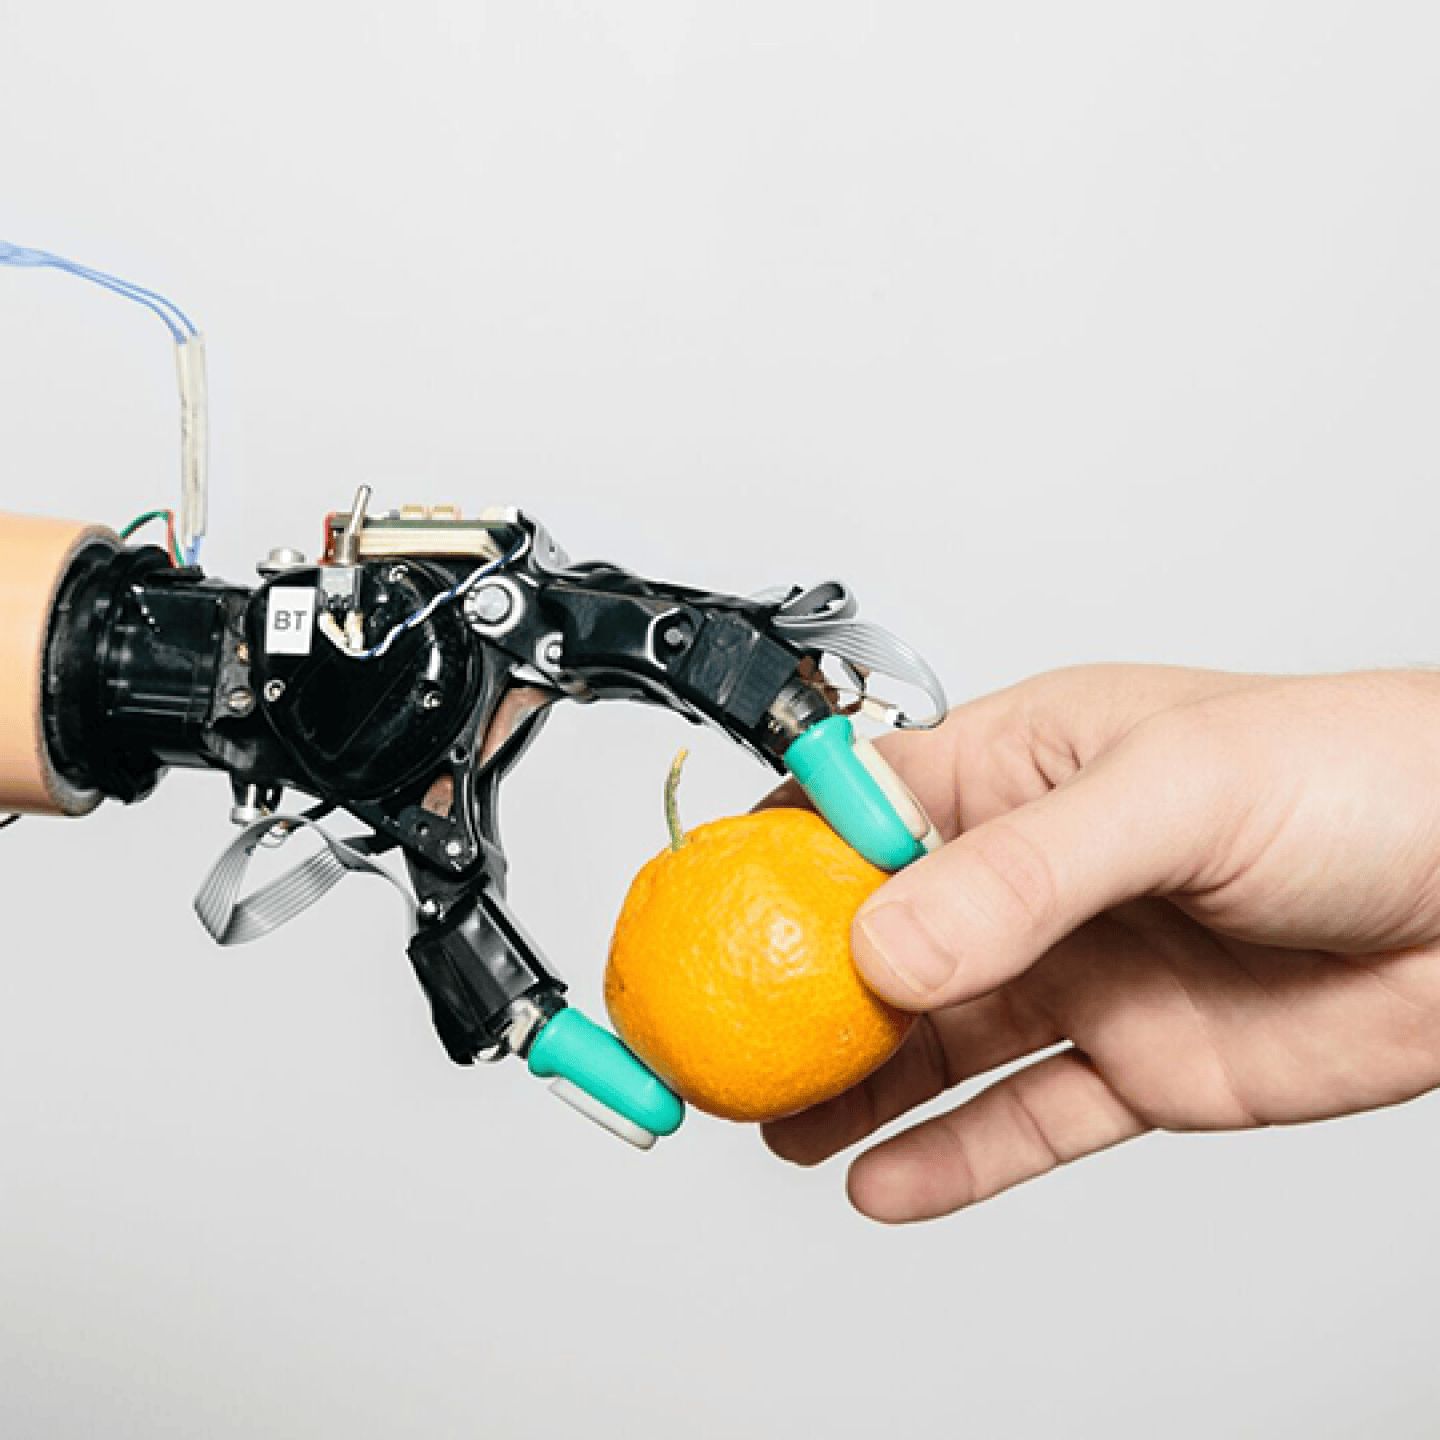 Mano de un robot cogiendo una naranja de una mano humana.